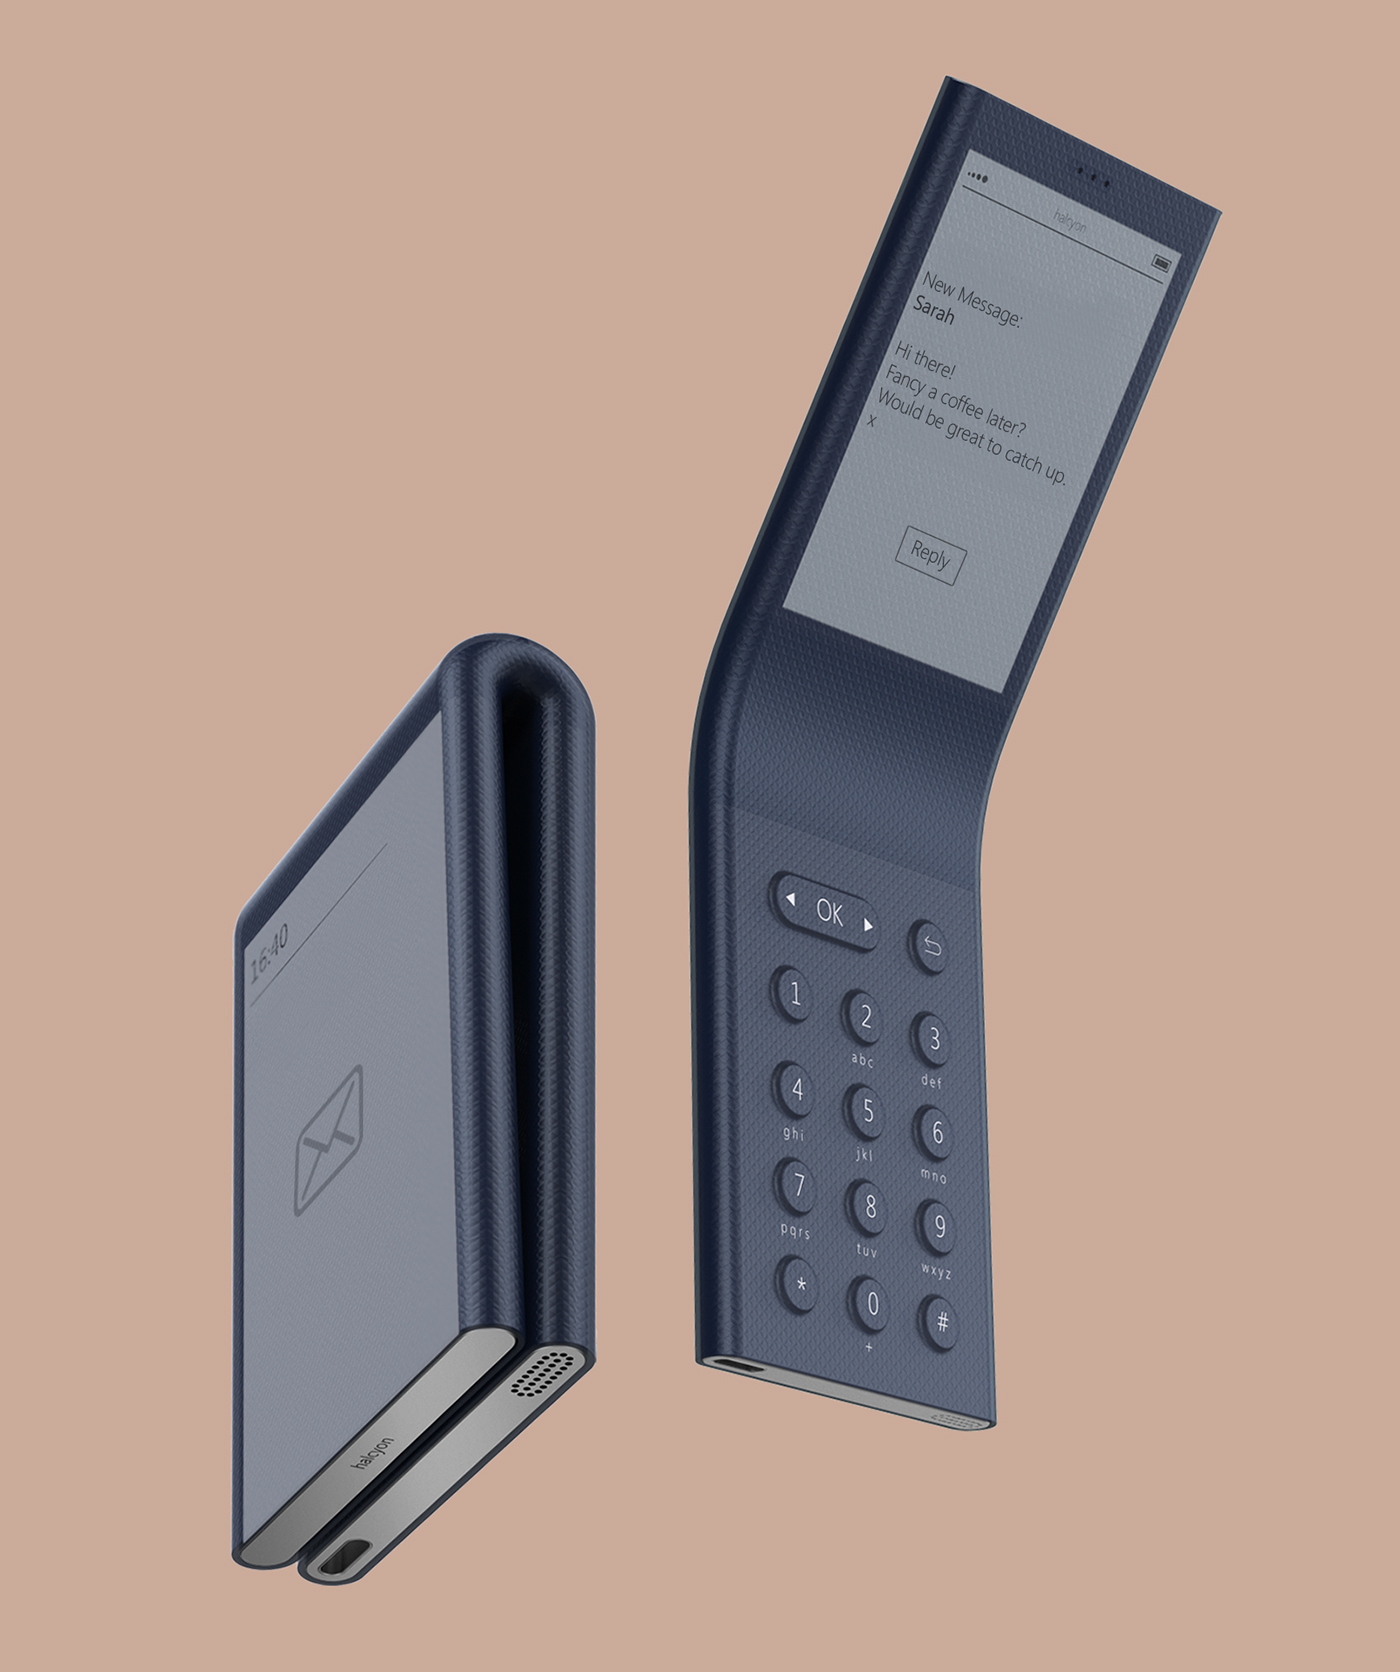 halcyon概念手机设计